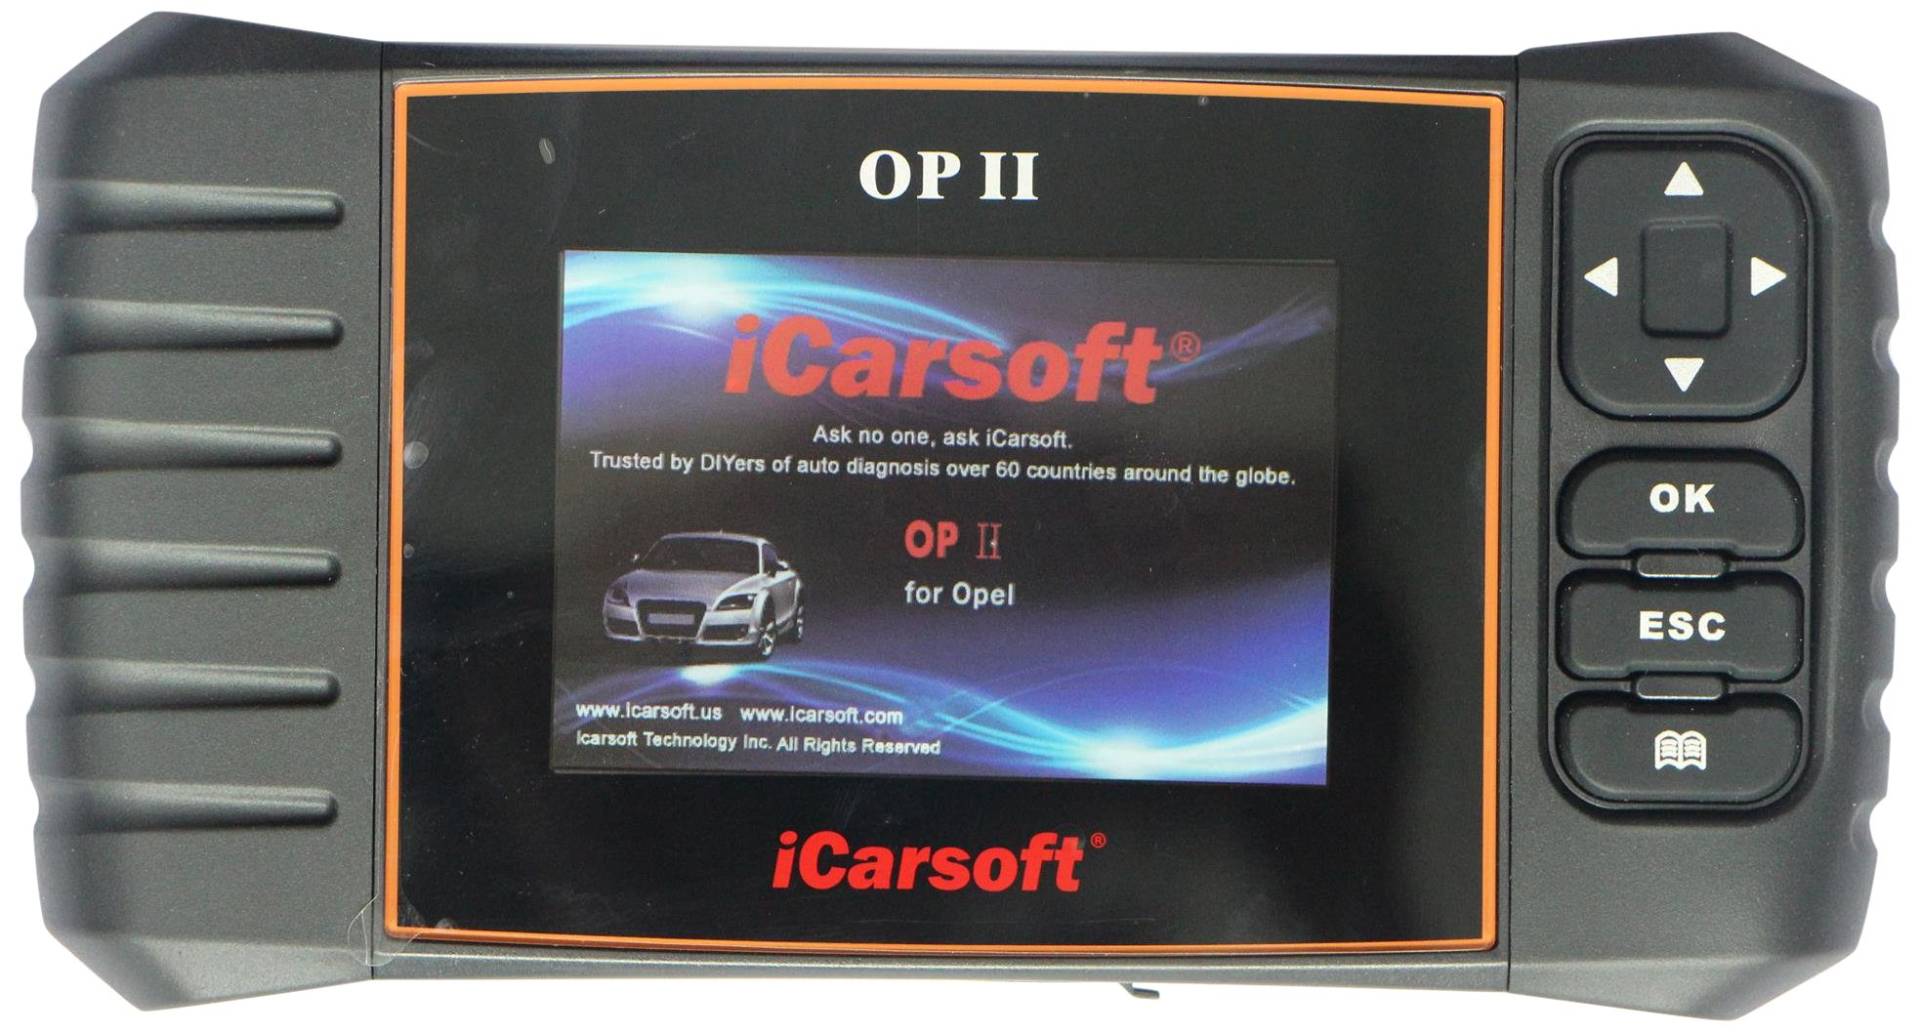 Opel OBDII DIY Scan Tools iCarsoft OP II Multi-Systems Scanner von iCarsoft